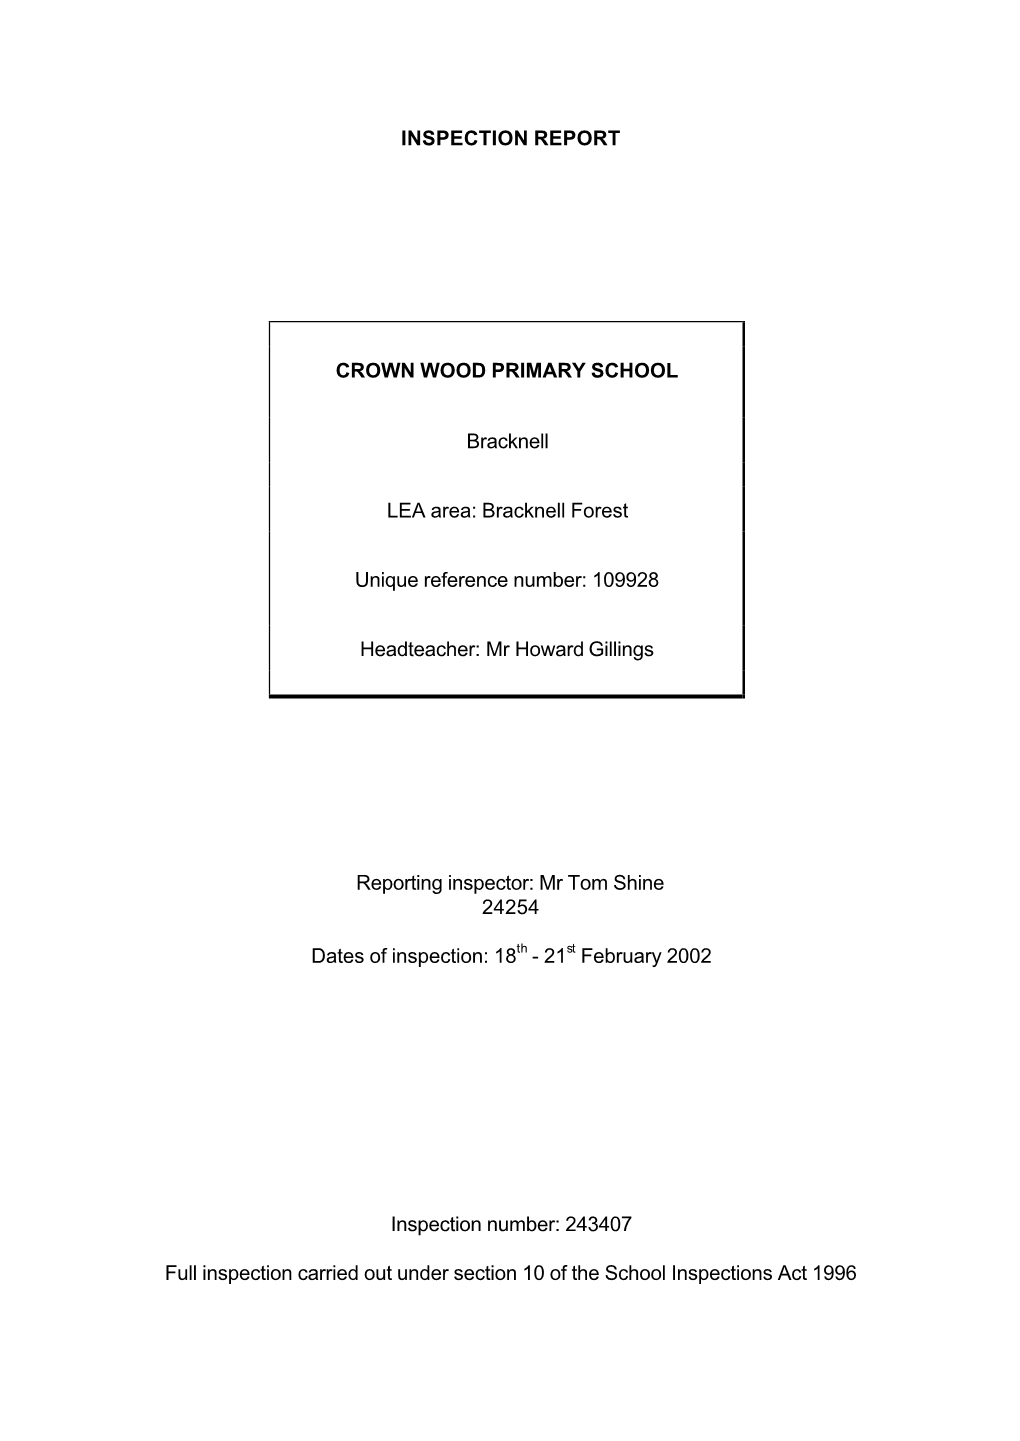 Inspection Report Crown Wood Primary School